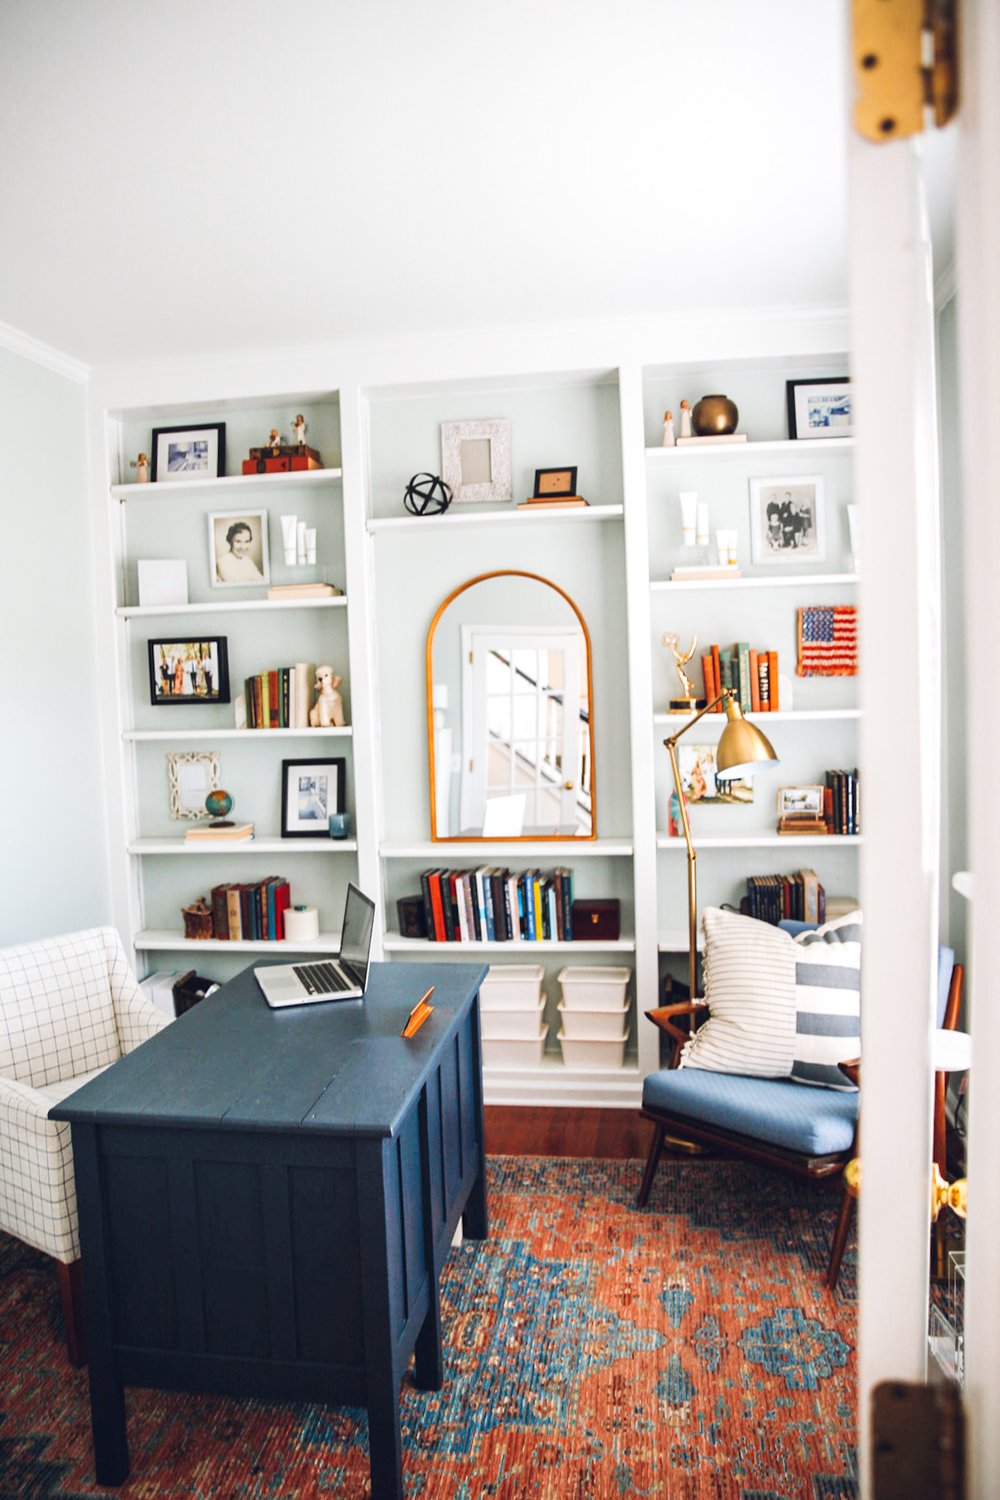 Girls' Room: Acrylic Bookshelves & a Library Wall - Pepper Design Blog